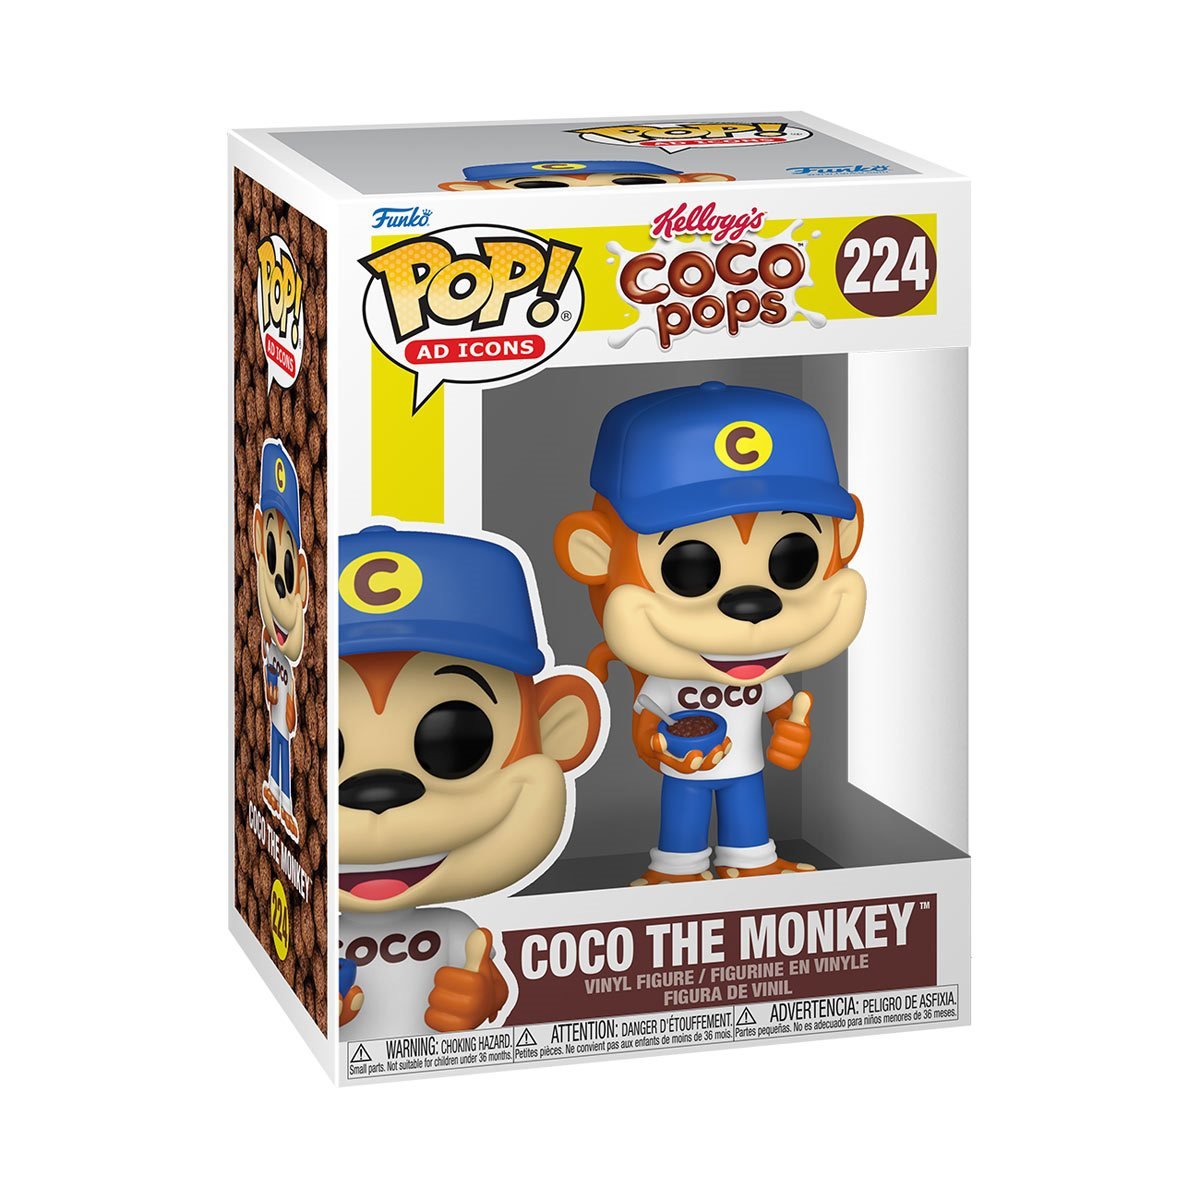 Kellogg's Coco the Monkey Funko Pop! Vinyl Figure #224 Pop-O-Loco